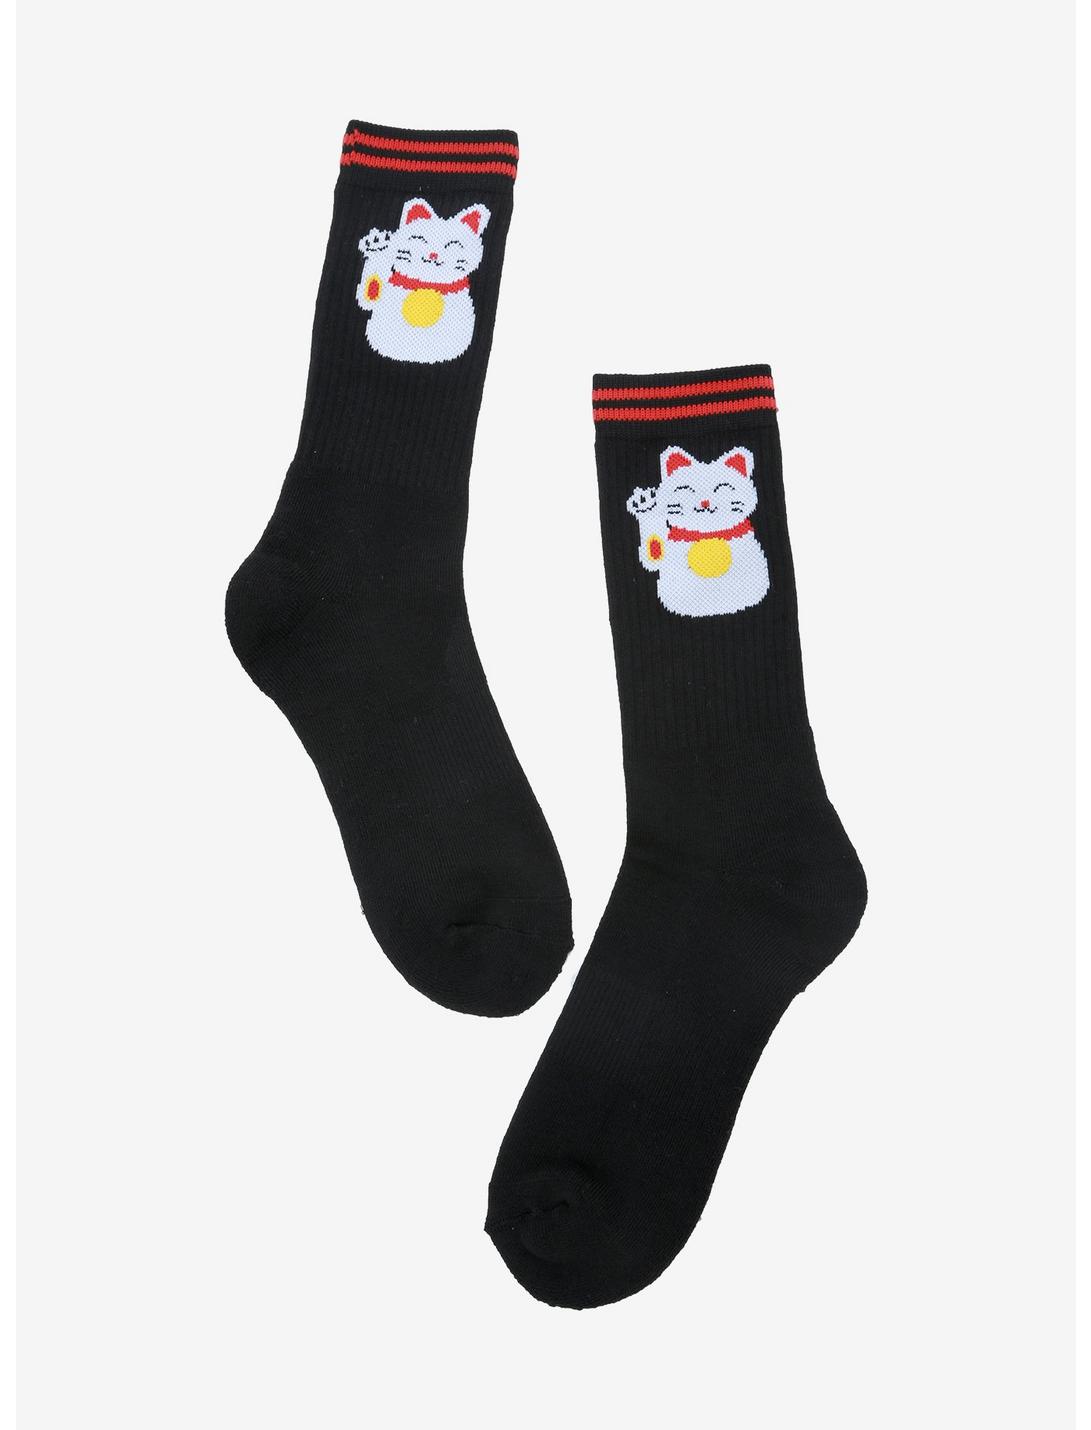 Lucky Cat Crew Socks, , hi-res